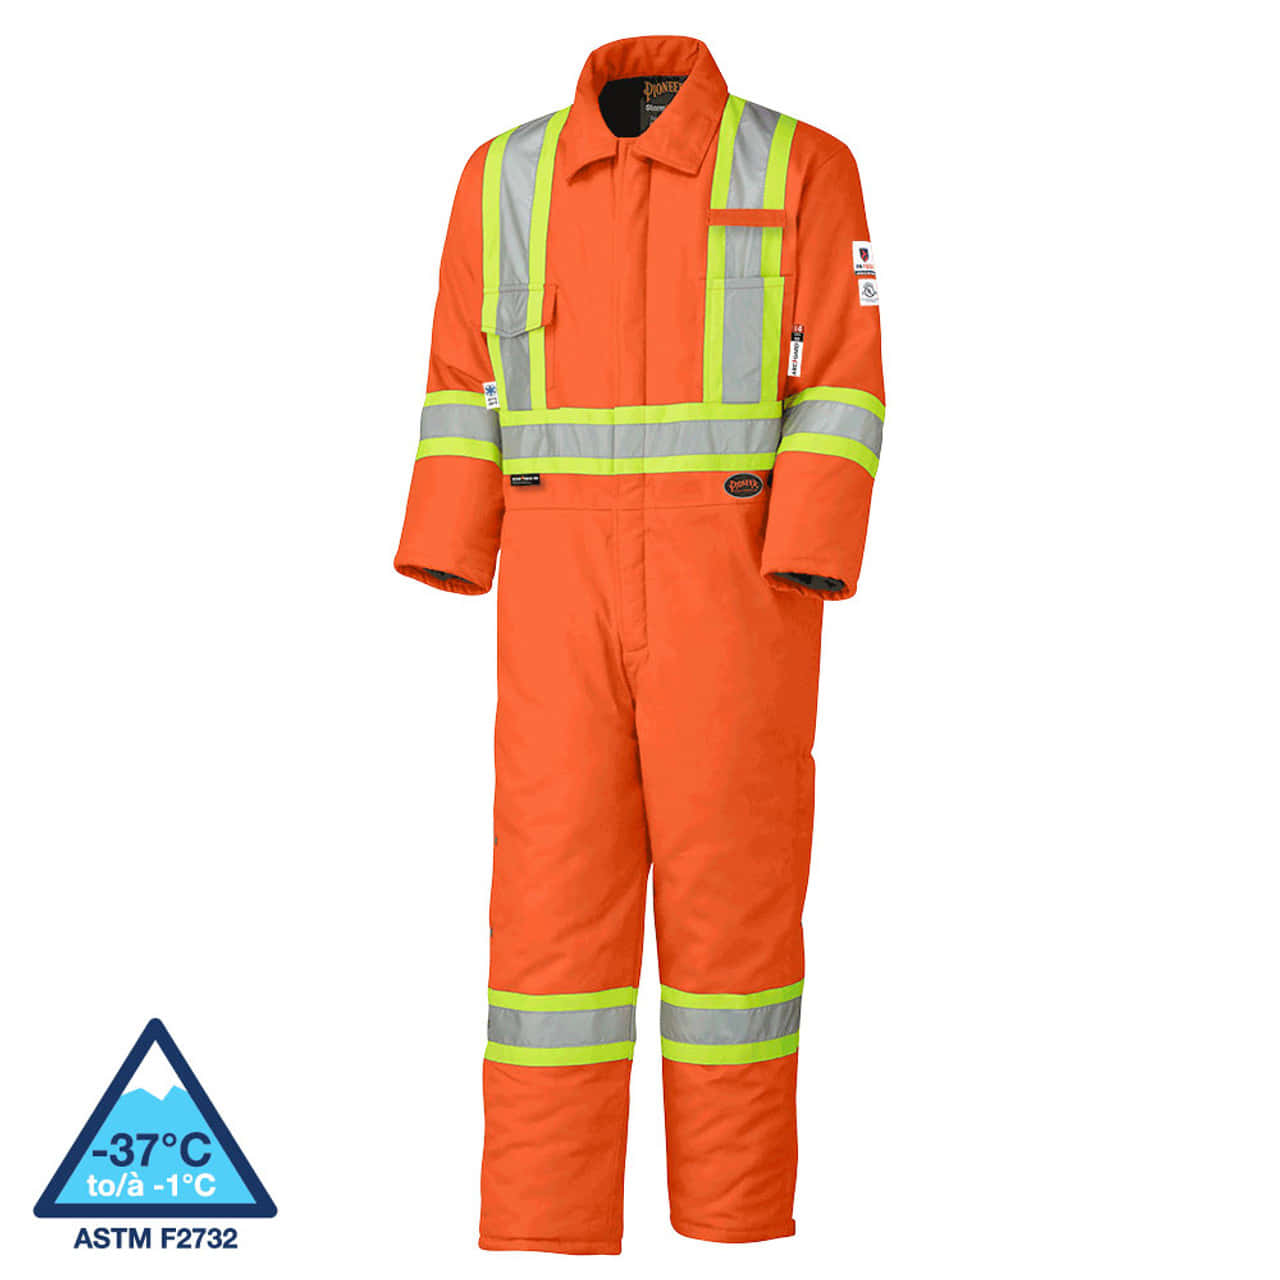 Construction Personnel Safety Suit Picture